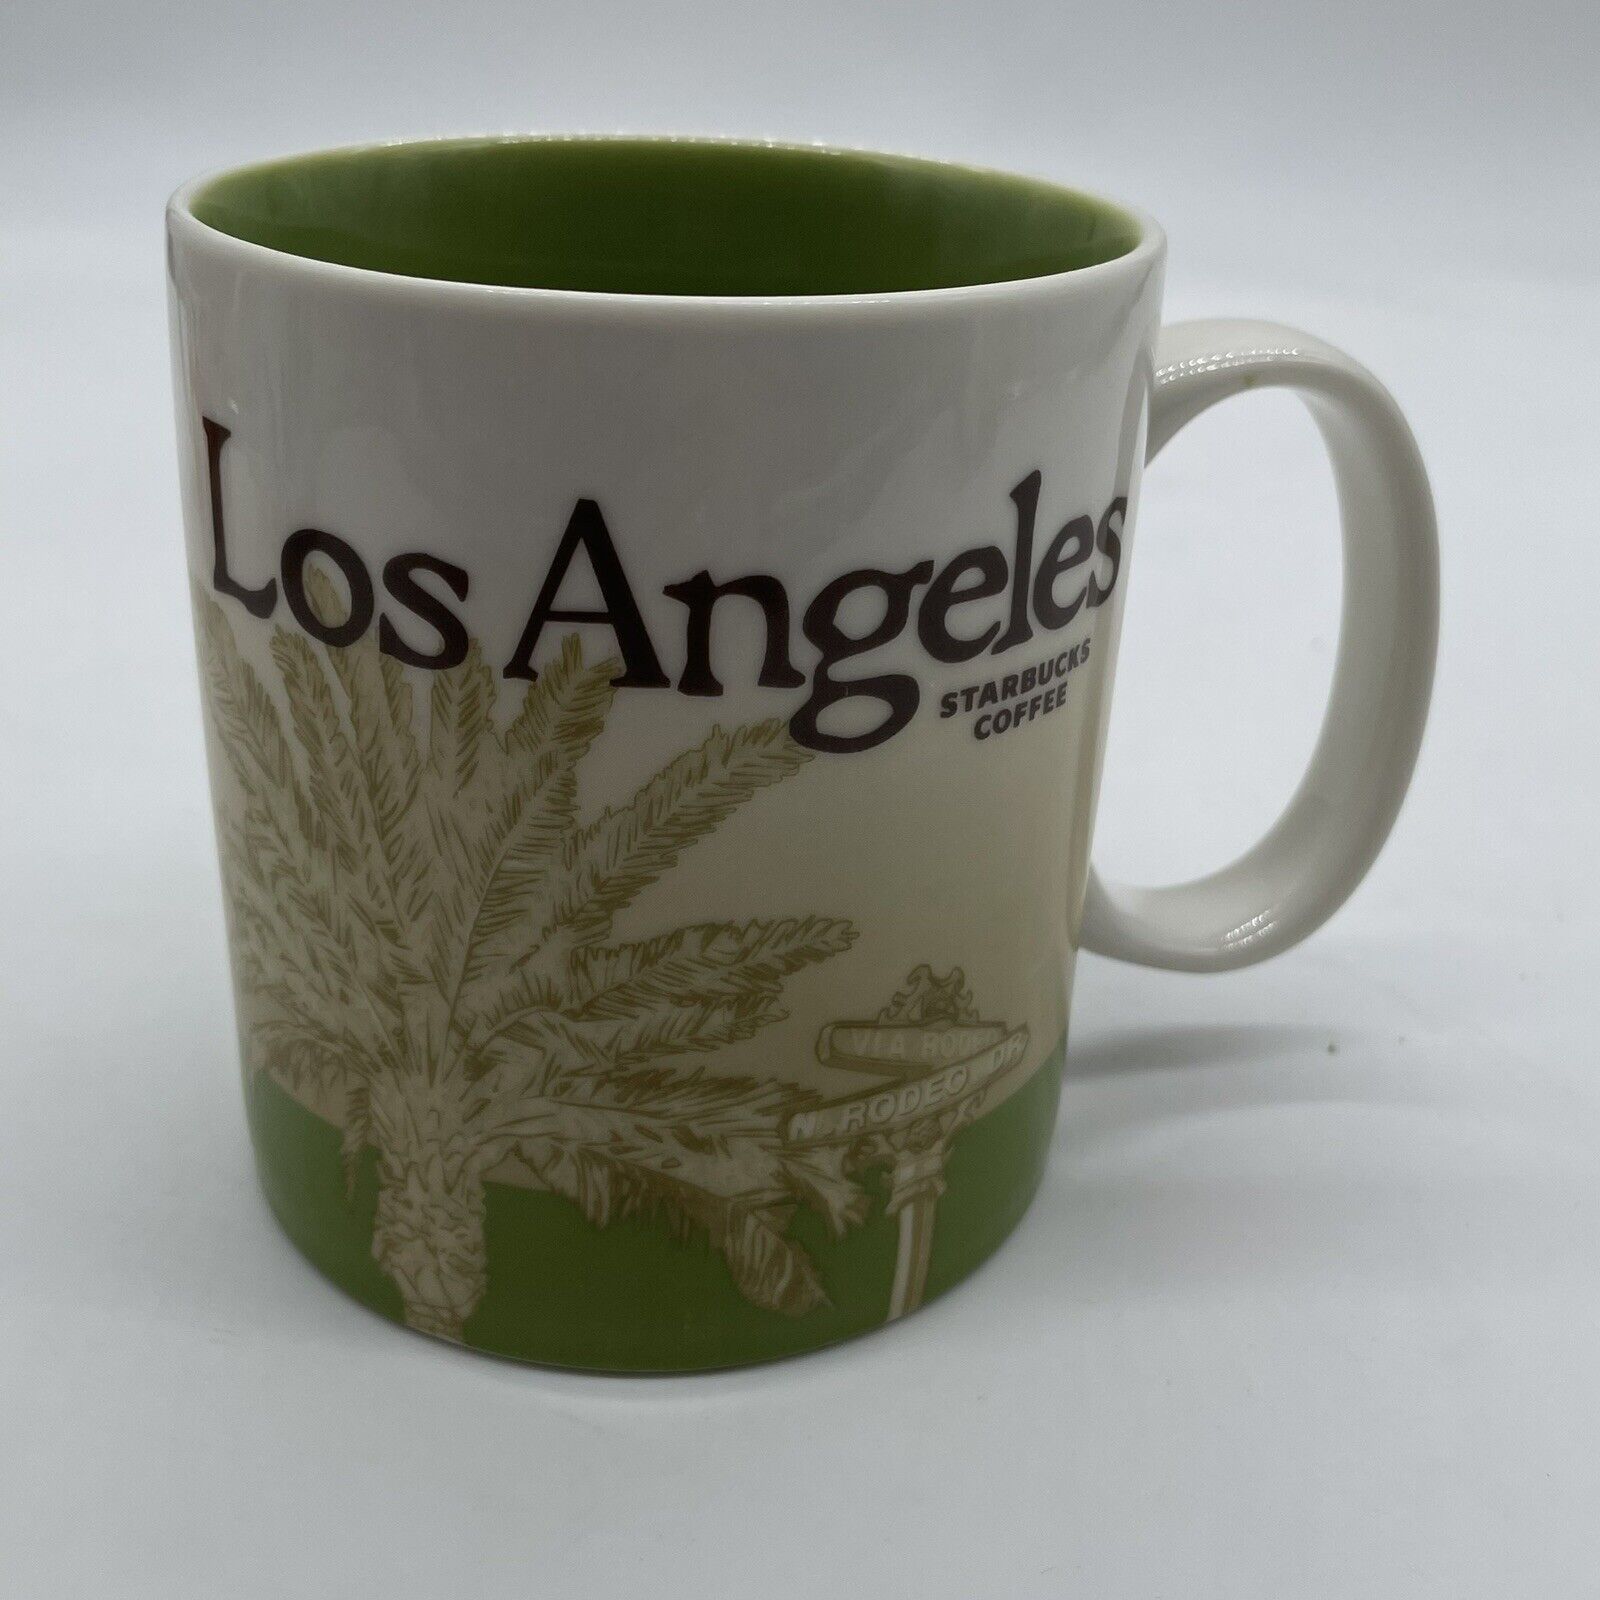 Starbucks Los Angeles City Mug Coffee Cup 2009 Global Icon Collector Series 16oz